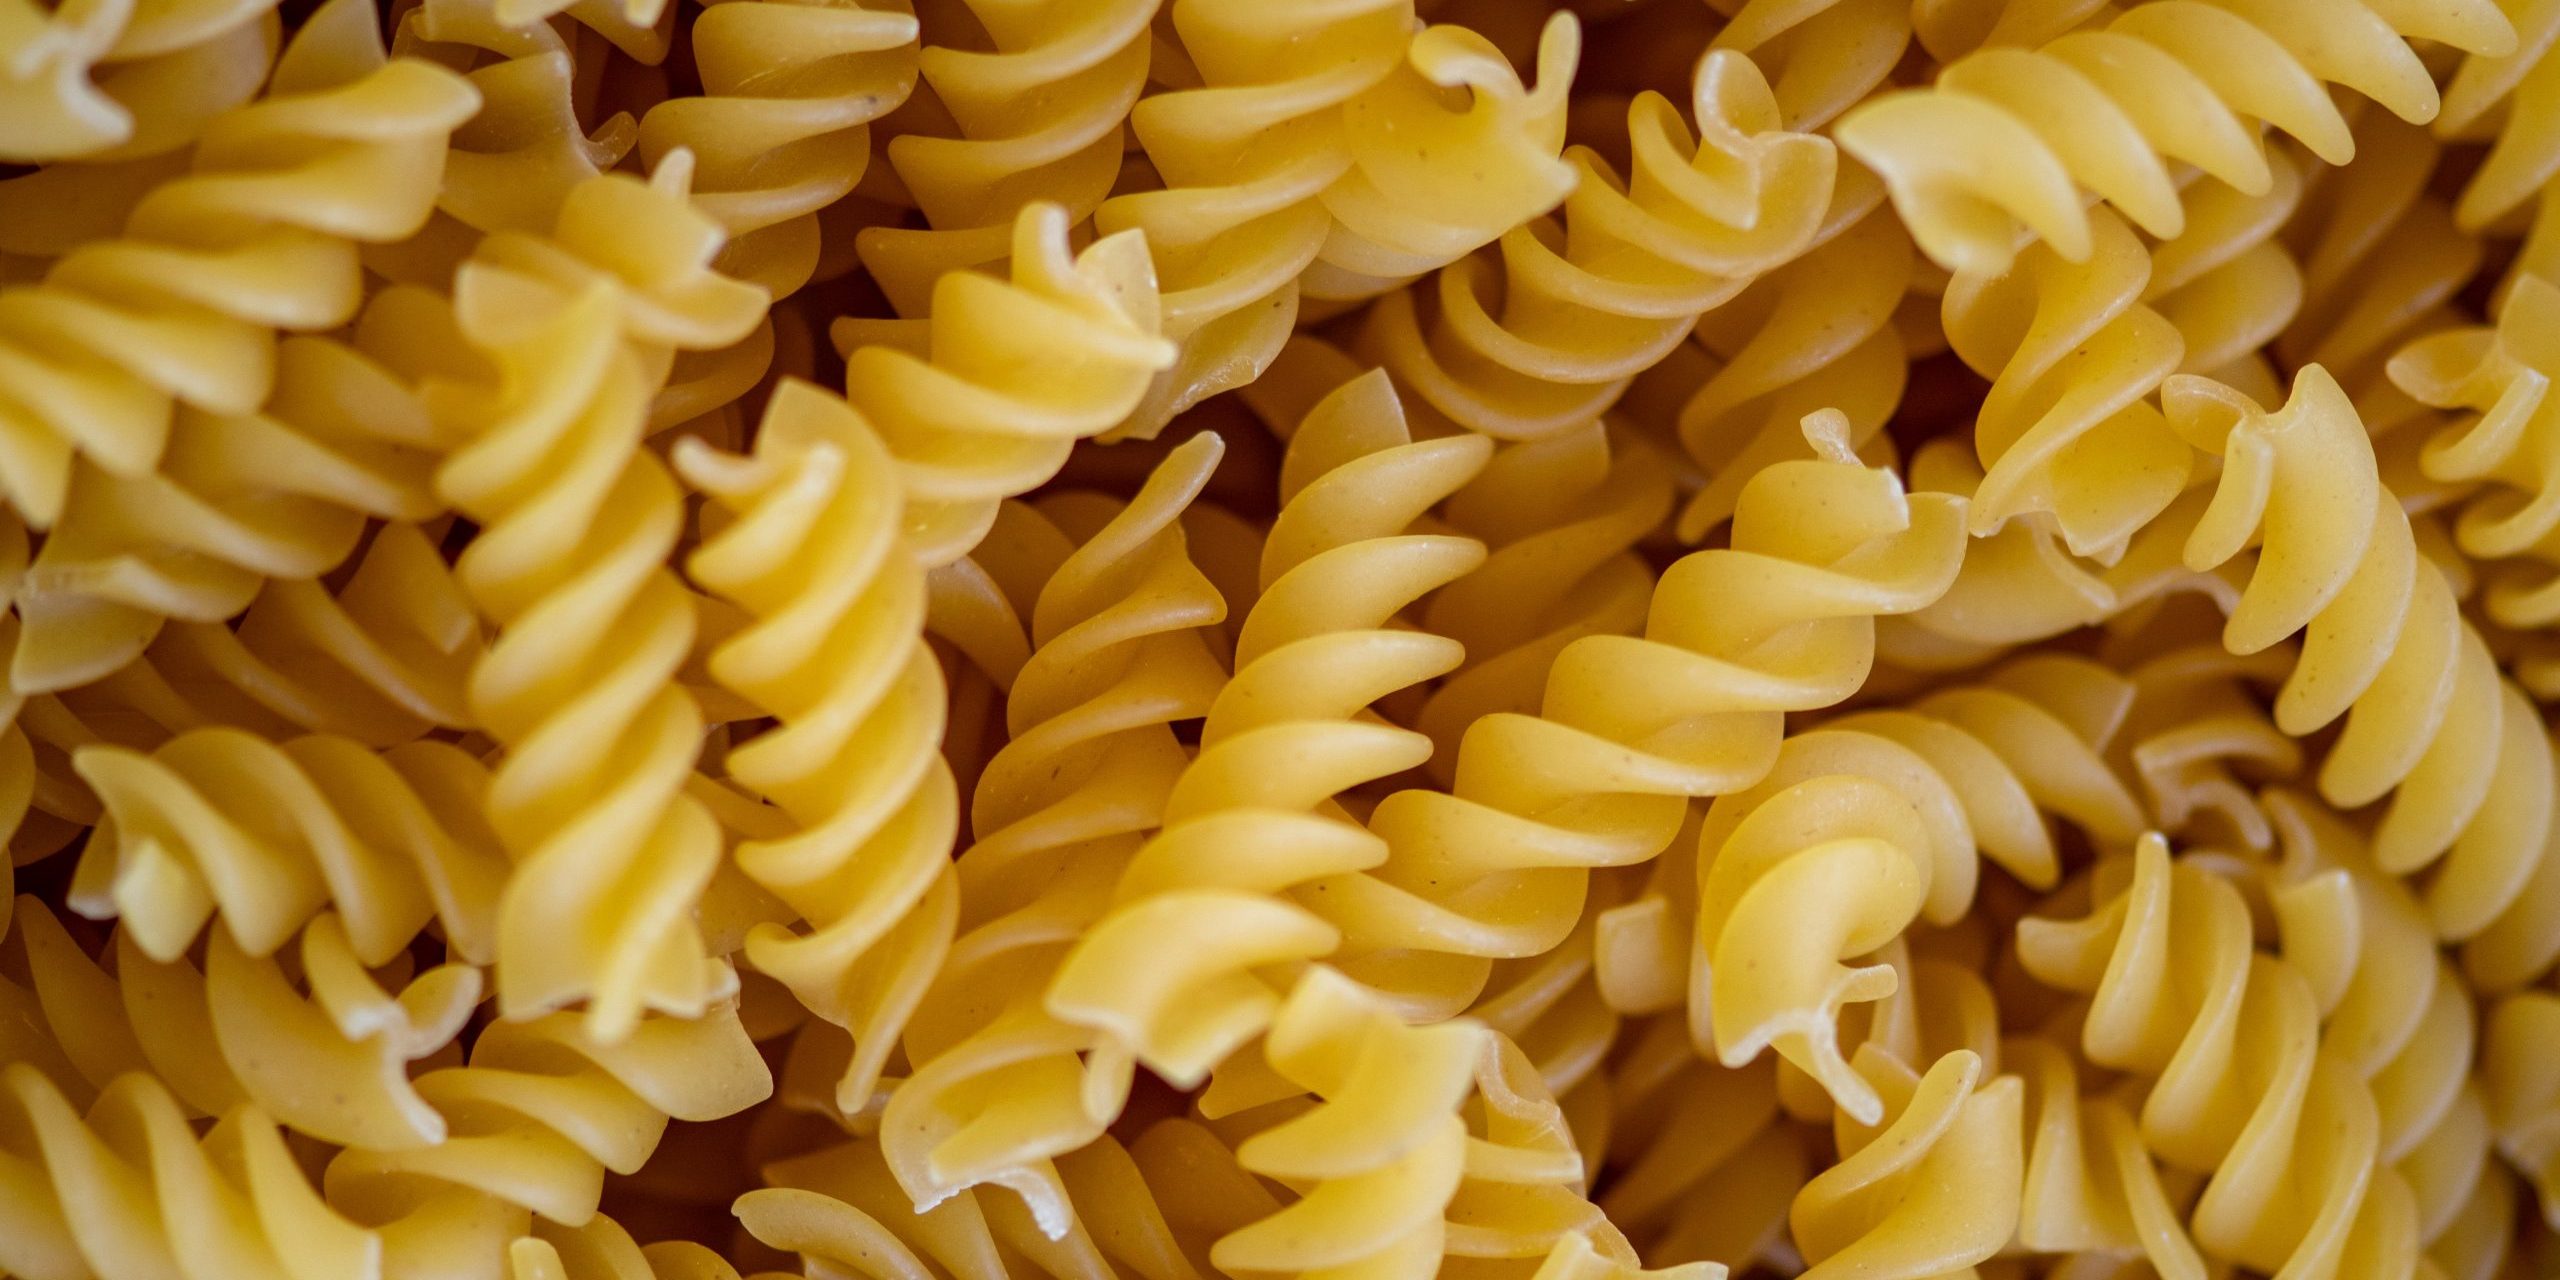 Stretch pasta